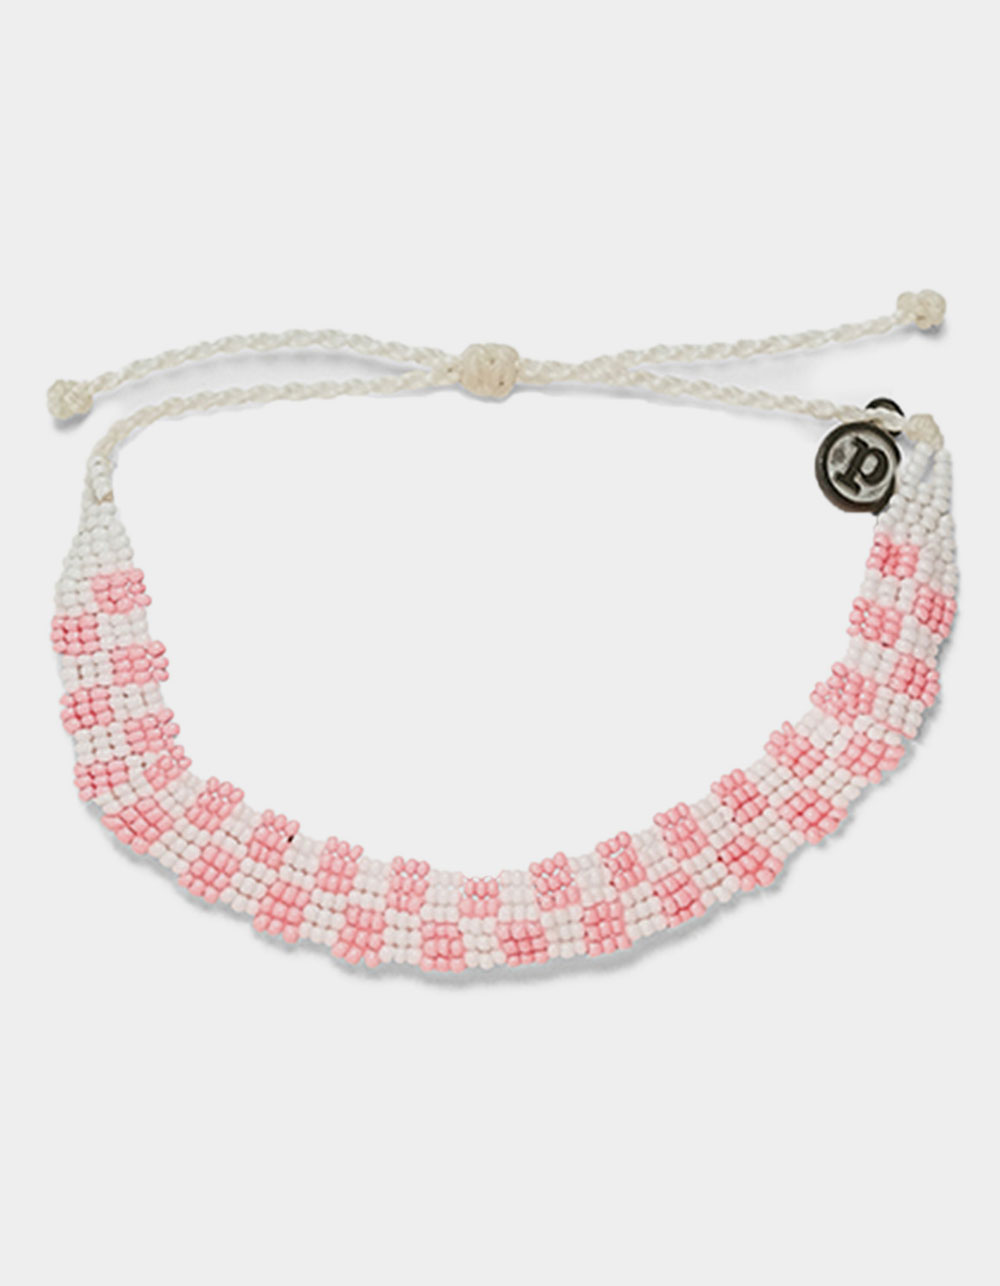 PURA VIDA Woven Seed Bead Checkerboard Bracelet